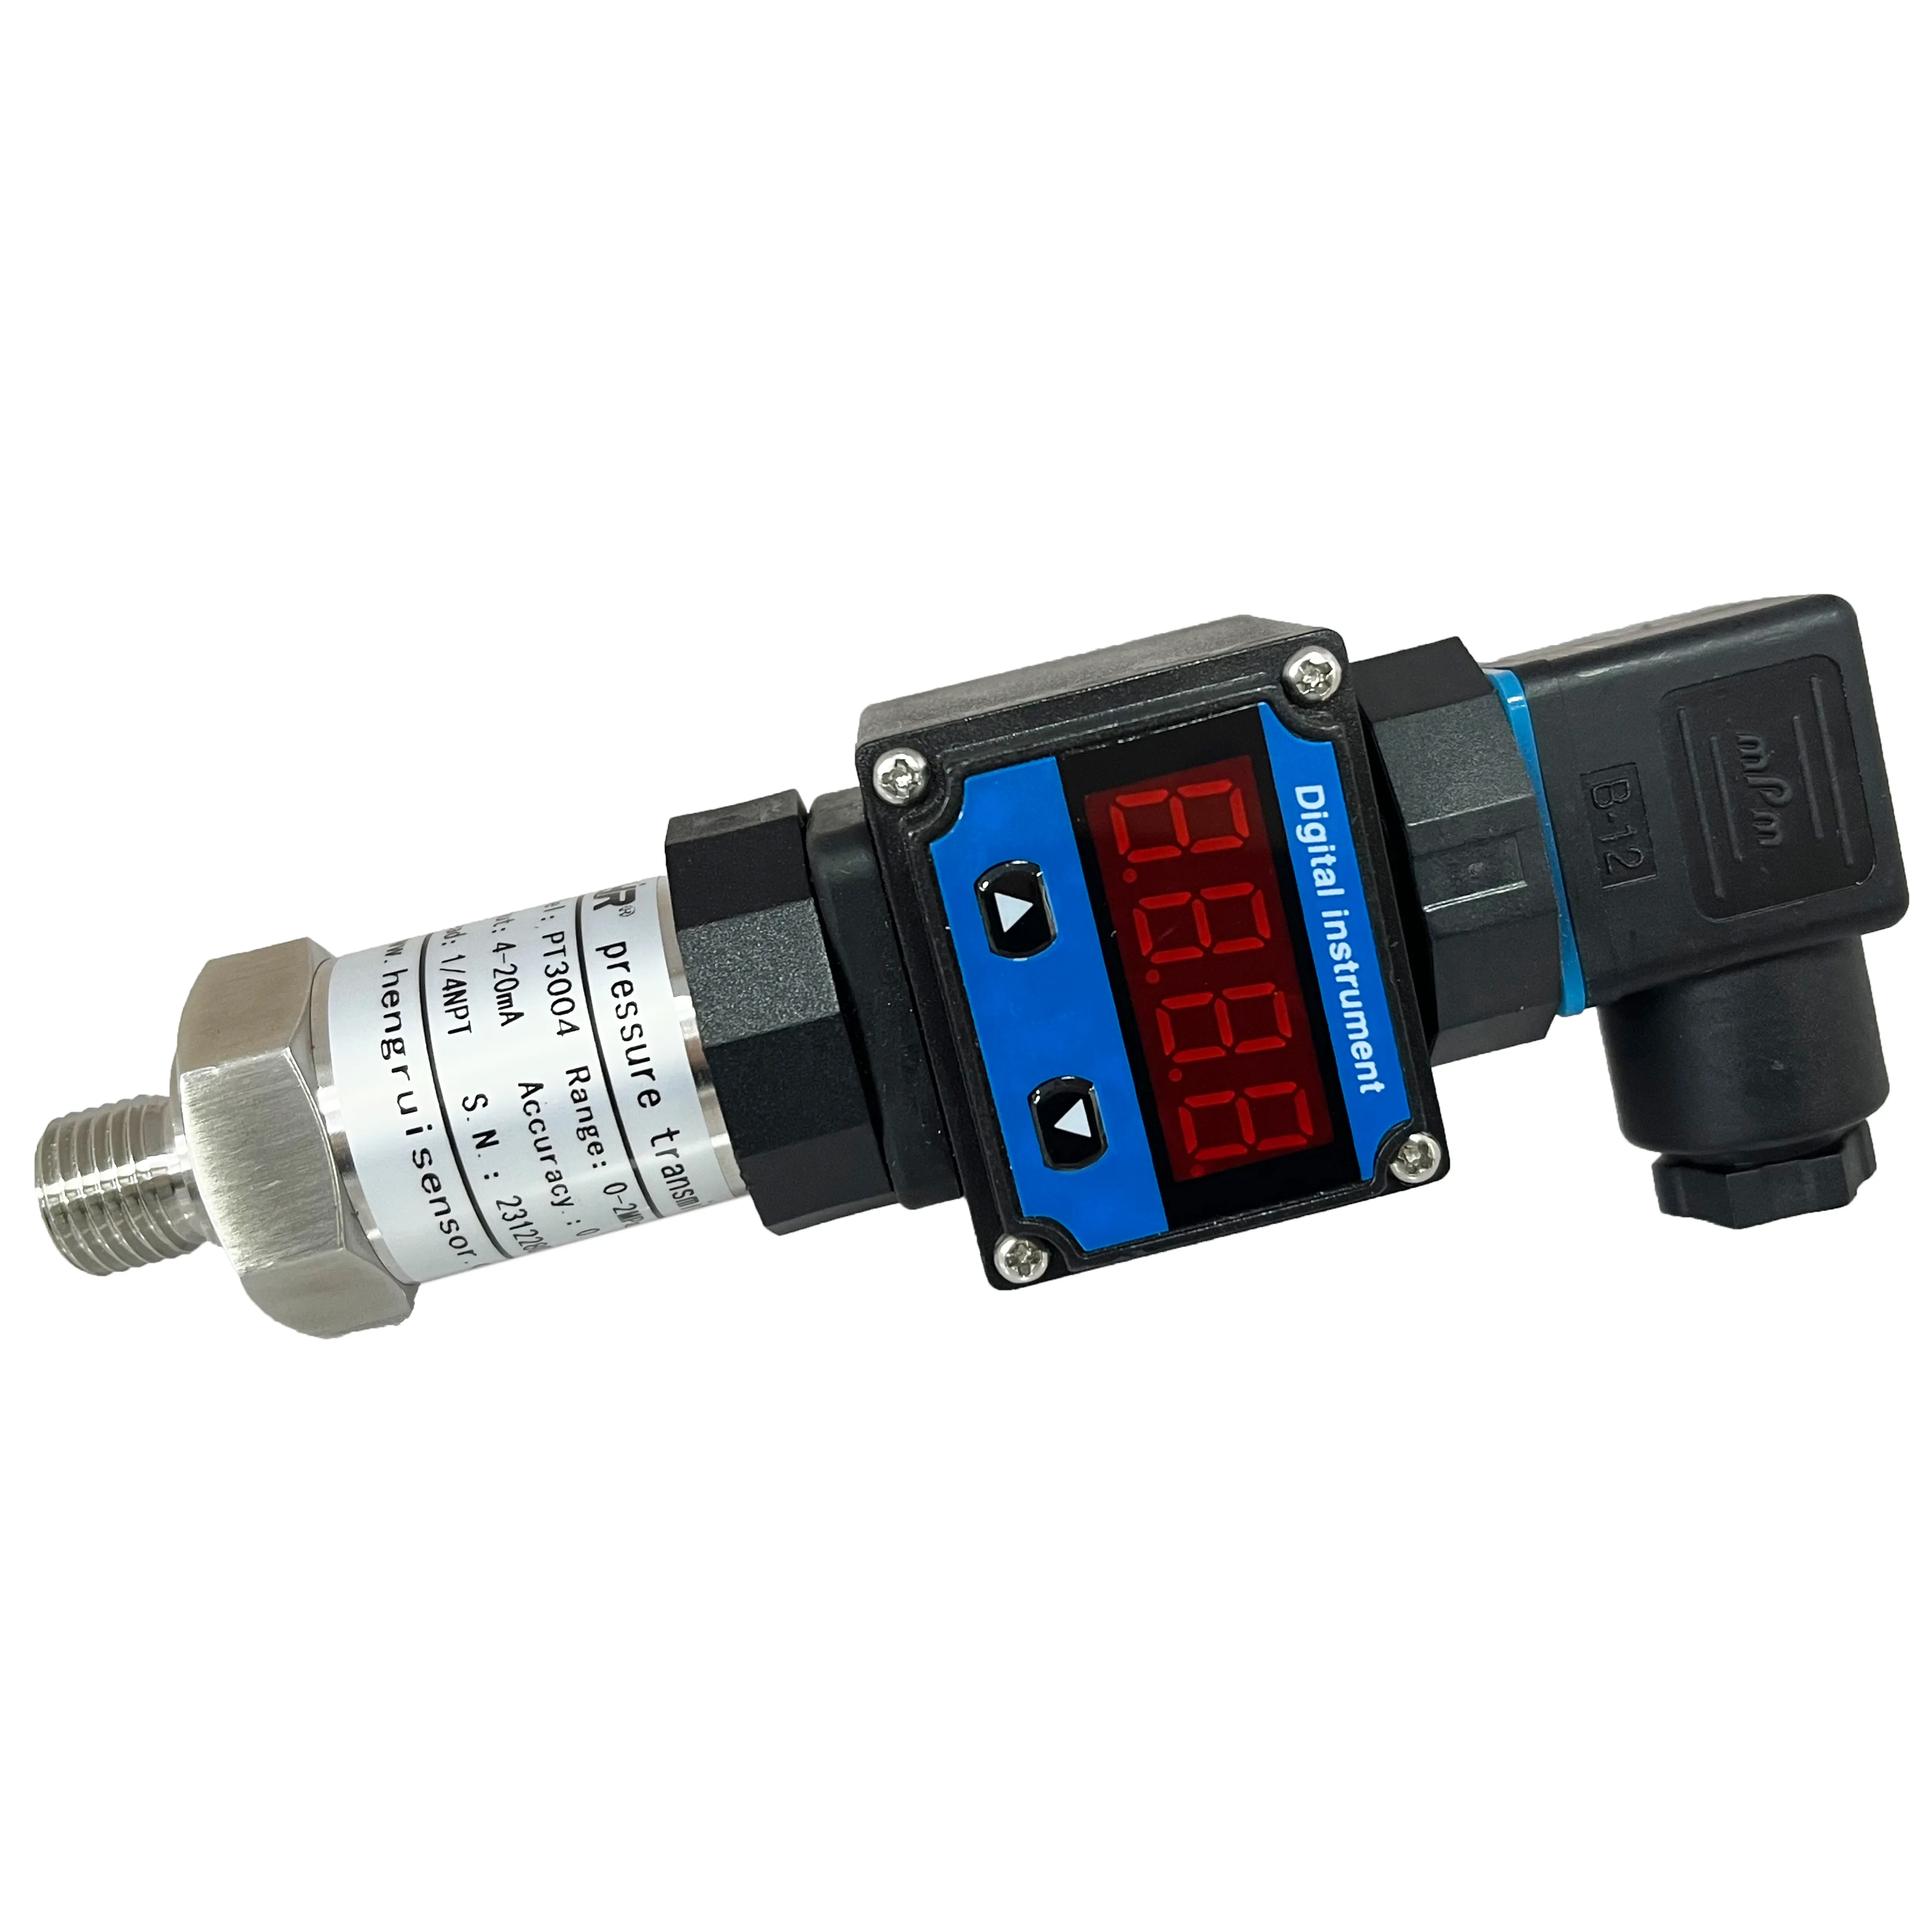 पानी के लिए PT3004 श्रृंखला मानक प्रकार दबाव ट्रांसमीटर तेल या गैस दबाव कम करने वाला वाल्व